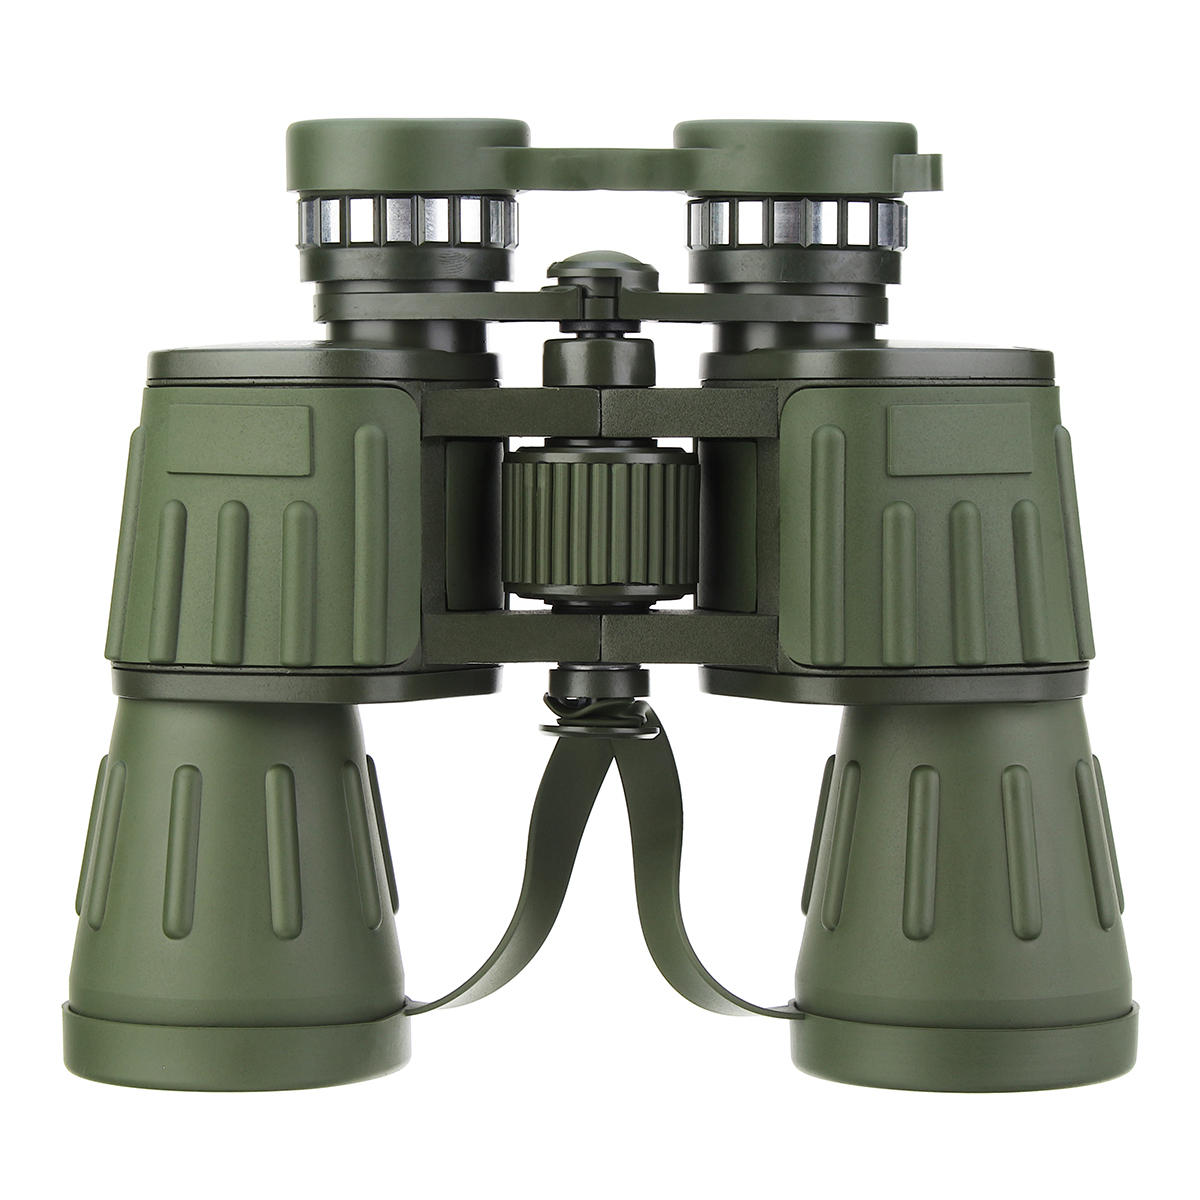 IPRee 60x50 BNV-M1 Военный Армейский бинокль HD Оптика Кемпинг Охотничий телескоп дневного / ночного видения